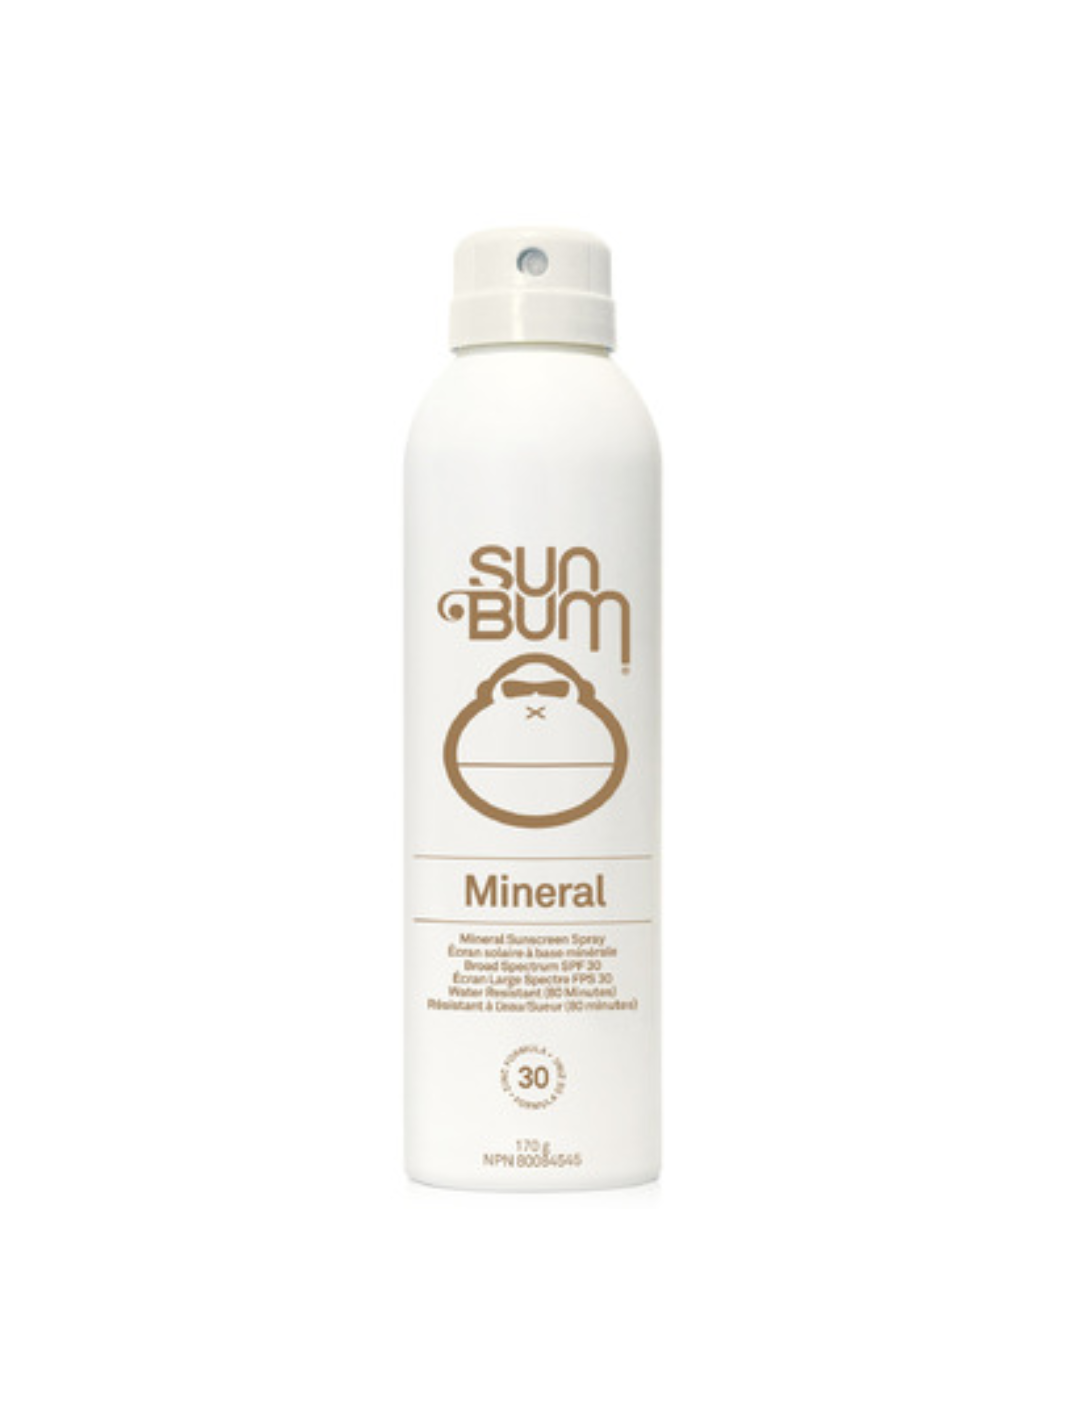 Mineral Sunscreen Spray SPF 30 Fragrance Free - 170g